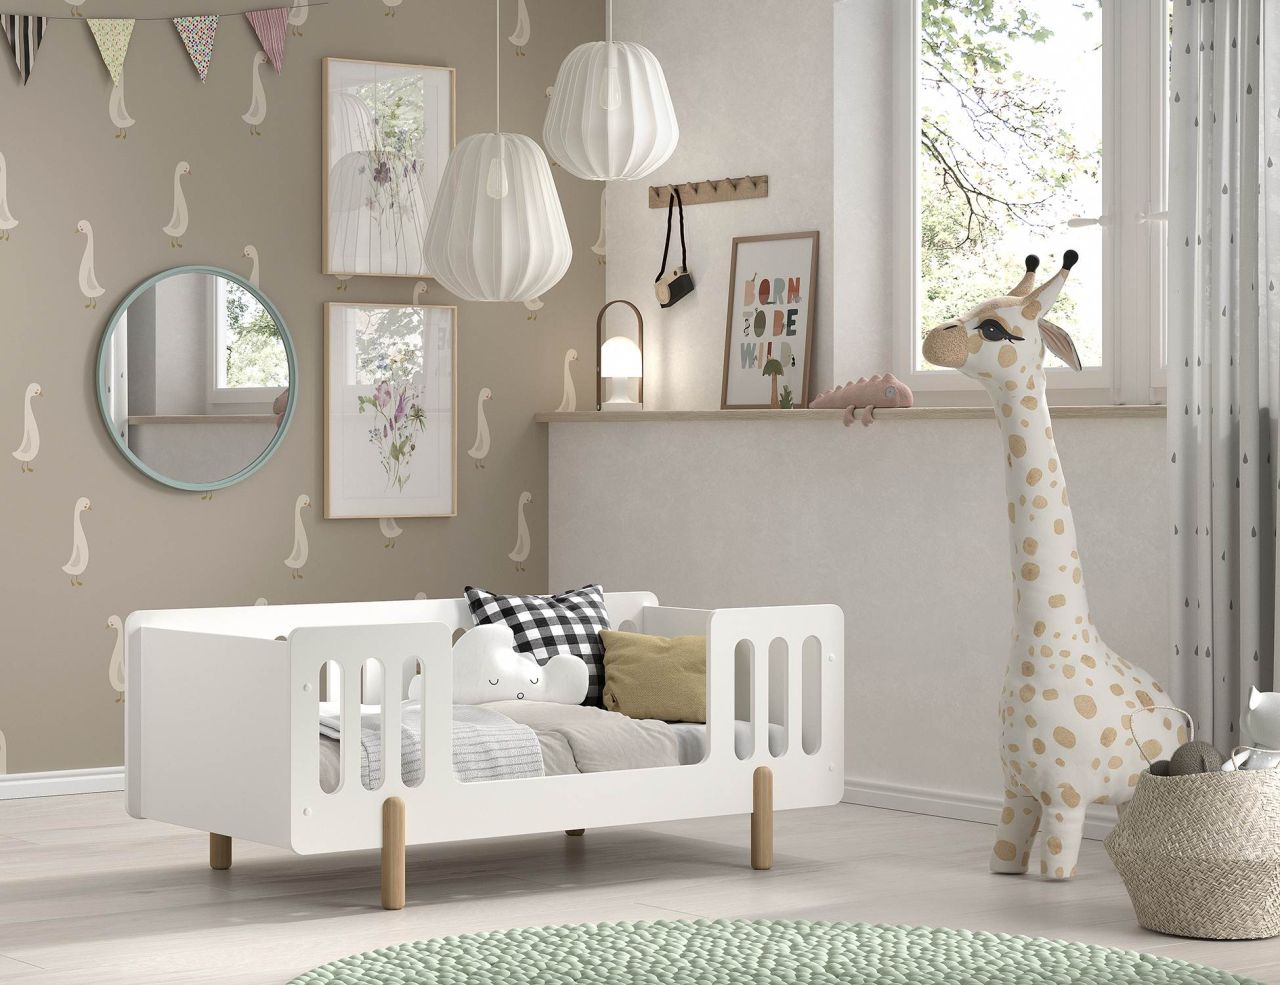 Juniorbett 70×140 mit Umrandung und Lattenrost Kinderbett Gitterbett offen Weiß